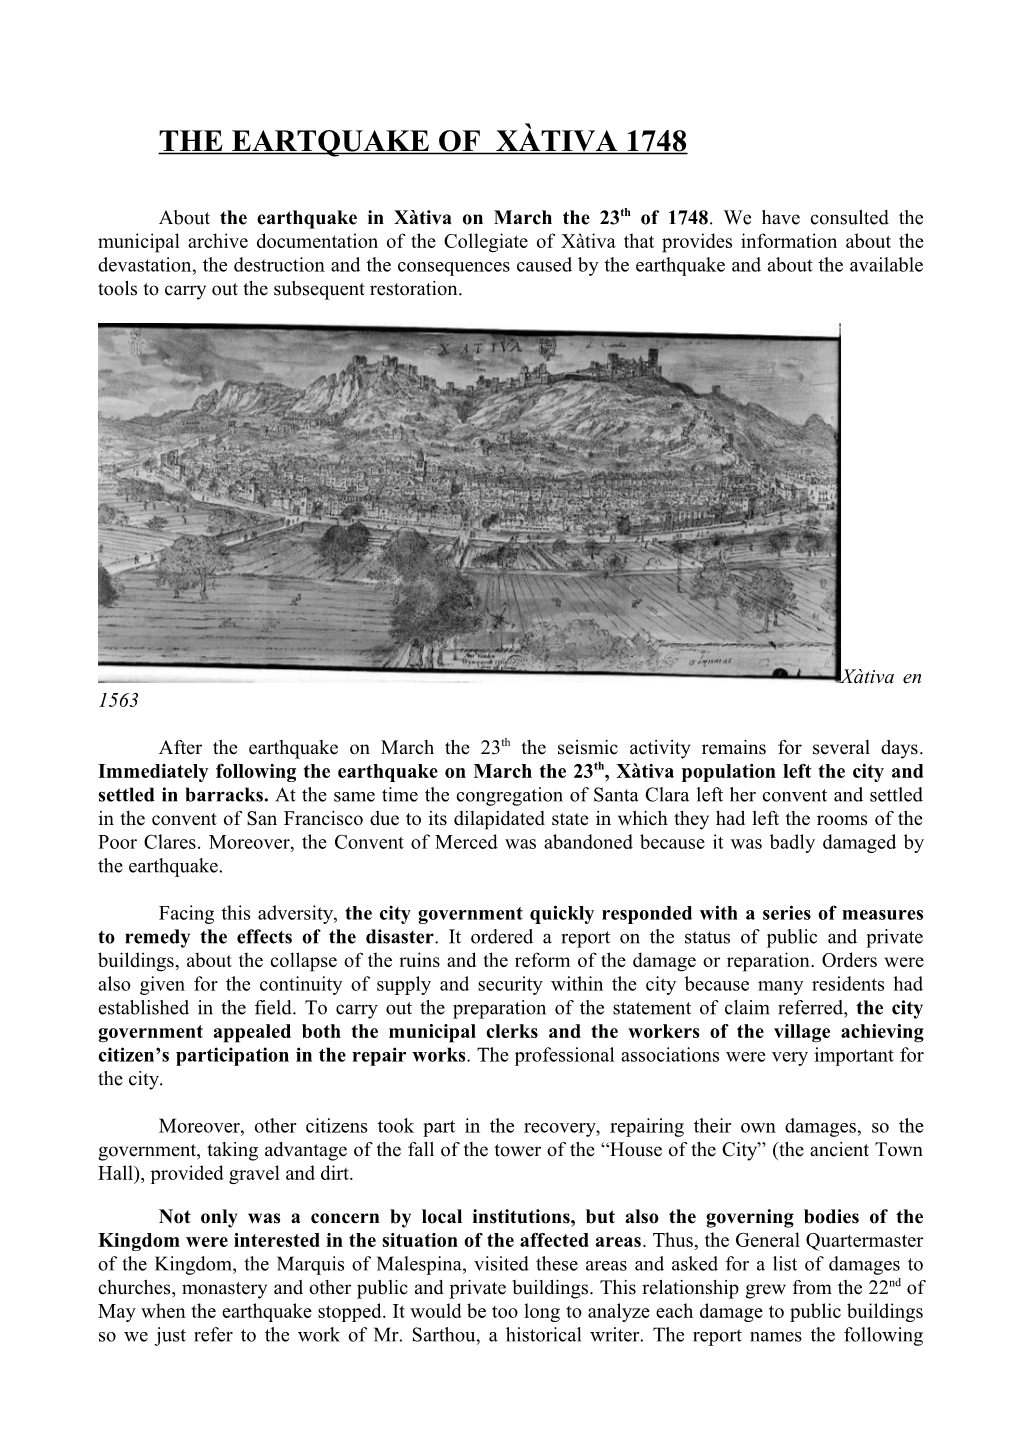 The Eartquake of Xàtiva 1748